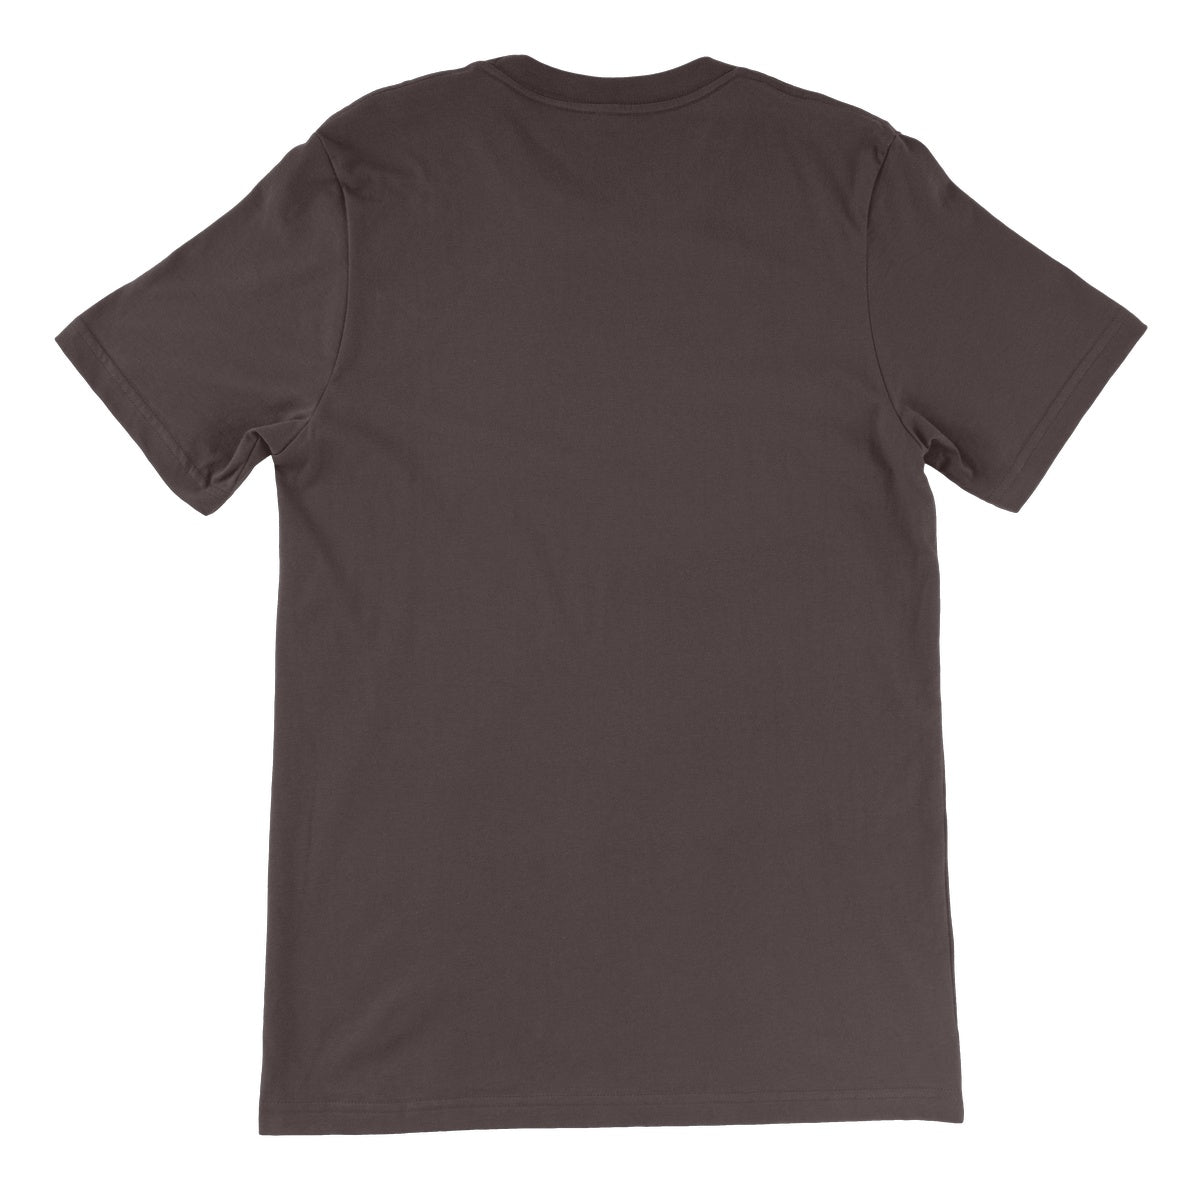 Möbius Flow, Pond Globe Unisex Short Sleeve T-Shirt